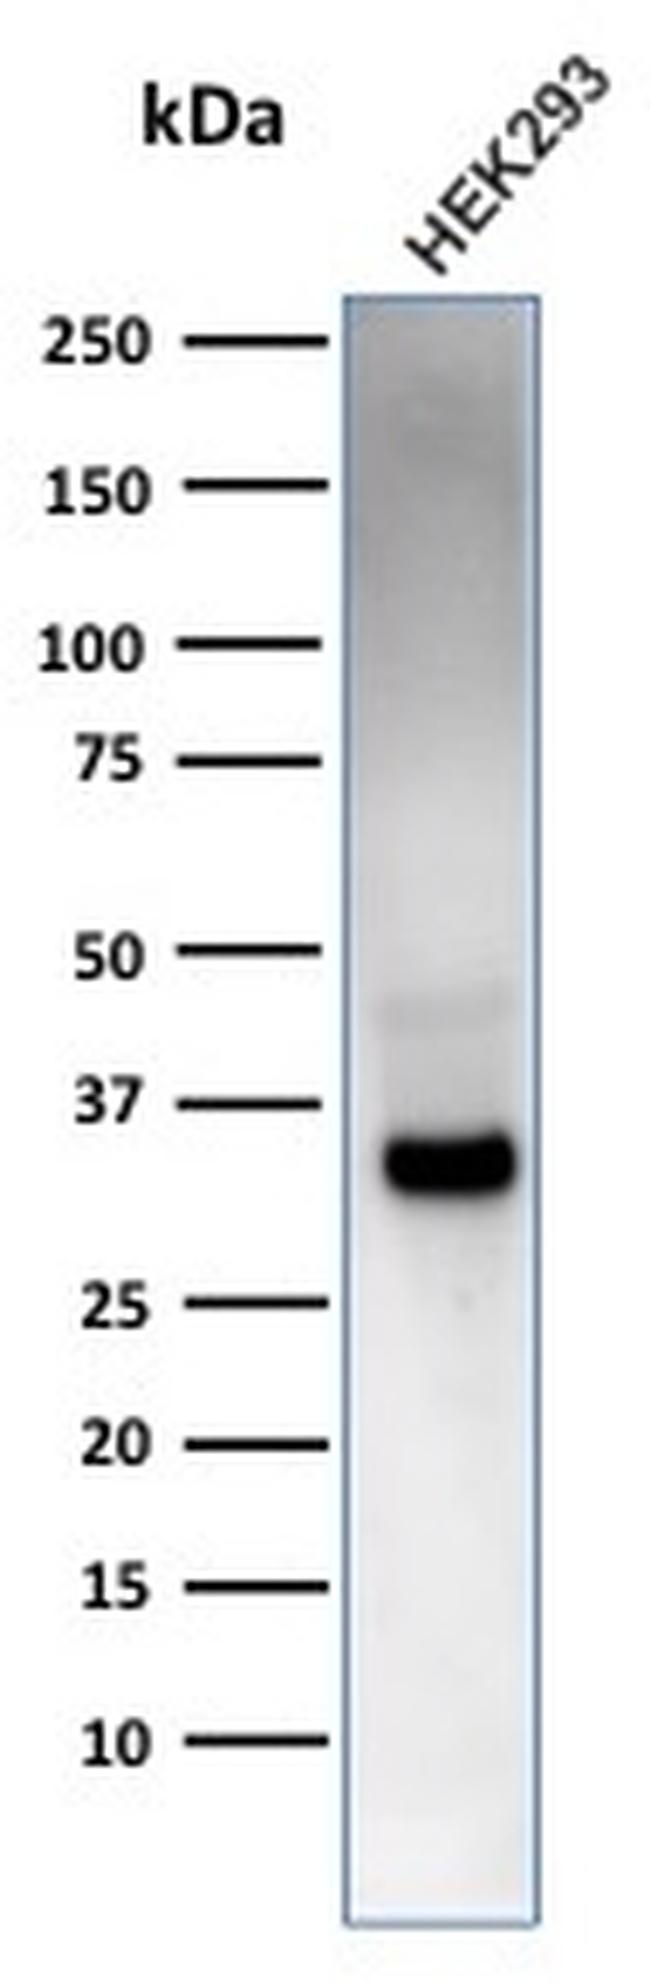 RCAS1/Estrogen Receptor Binding Site Associated, Antigen 9 Antibody in Western Blot (WB)